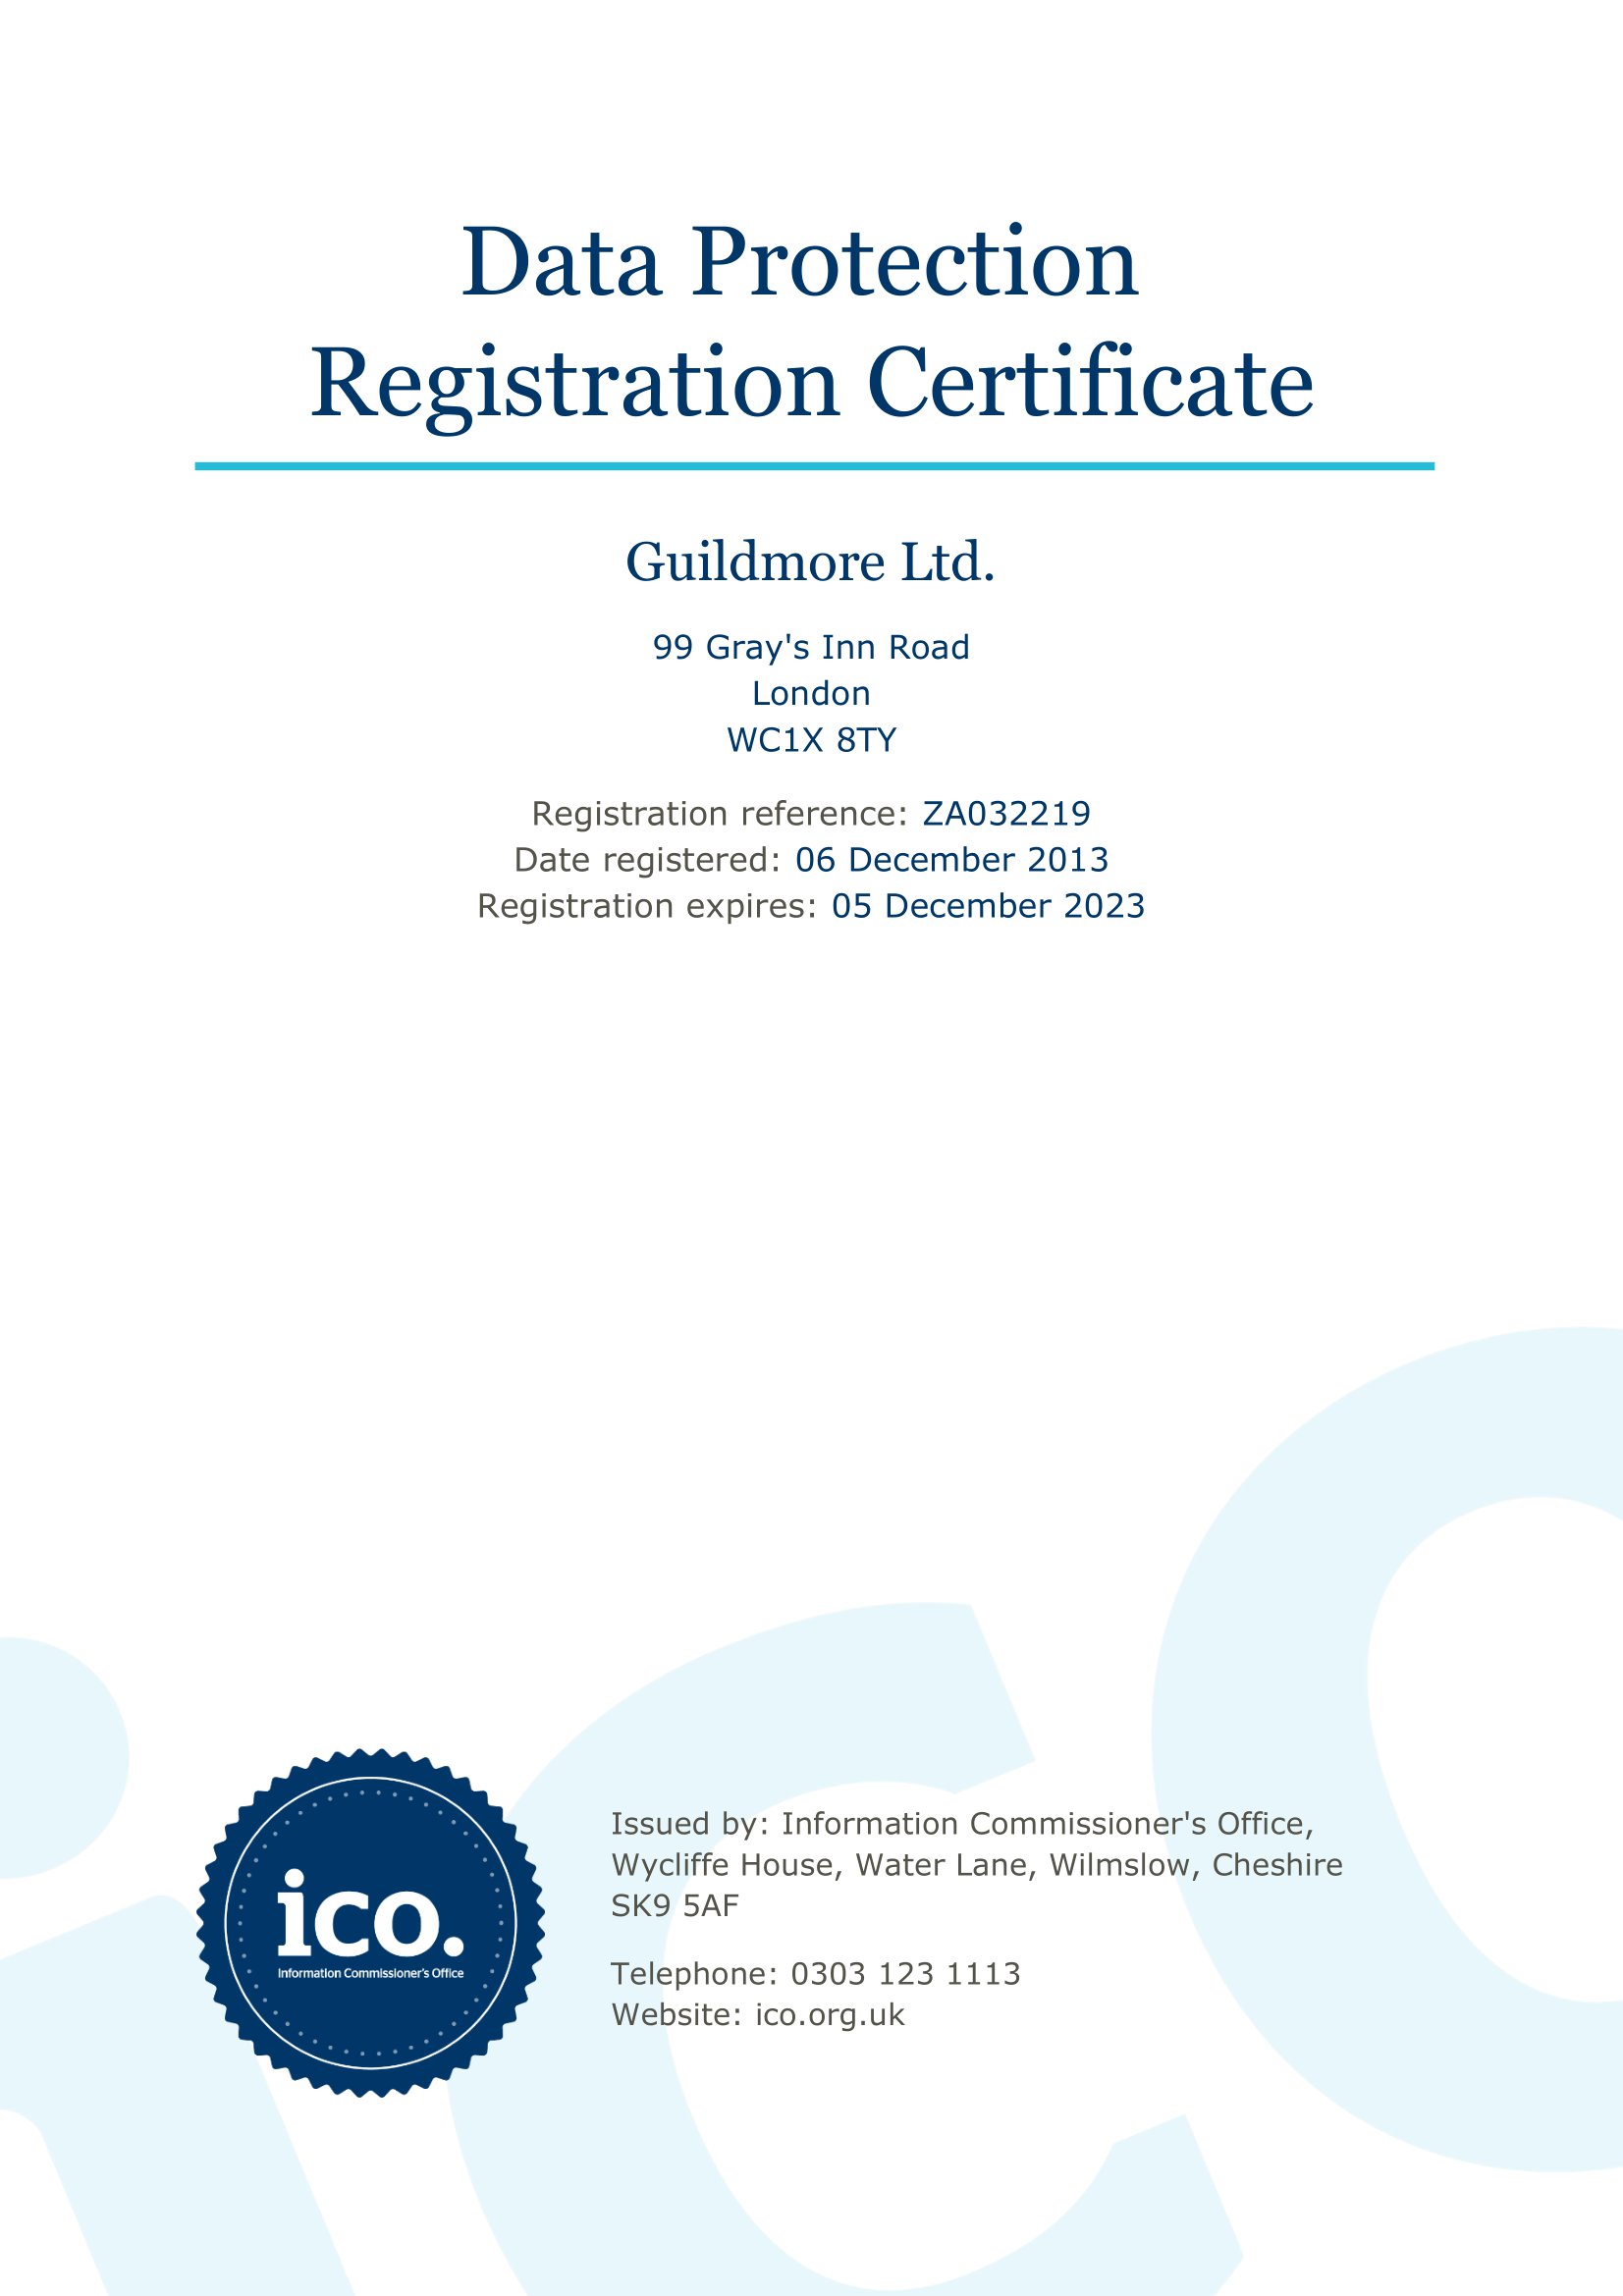 Registration Certificate - ZA032219